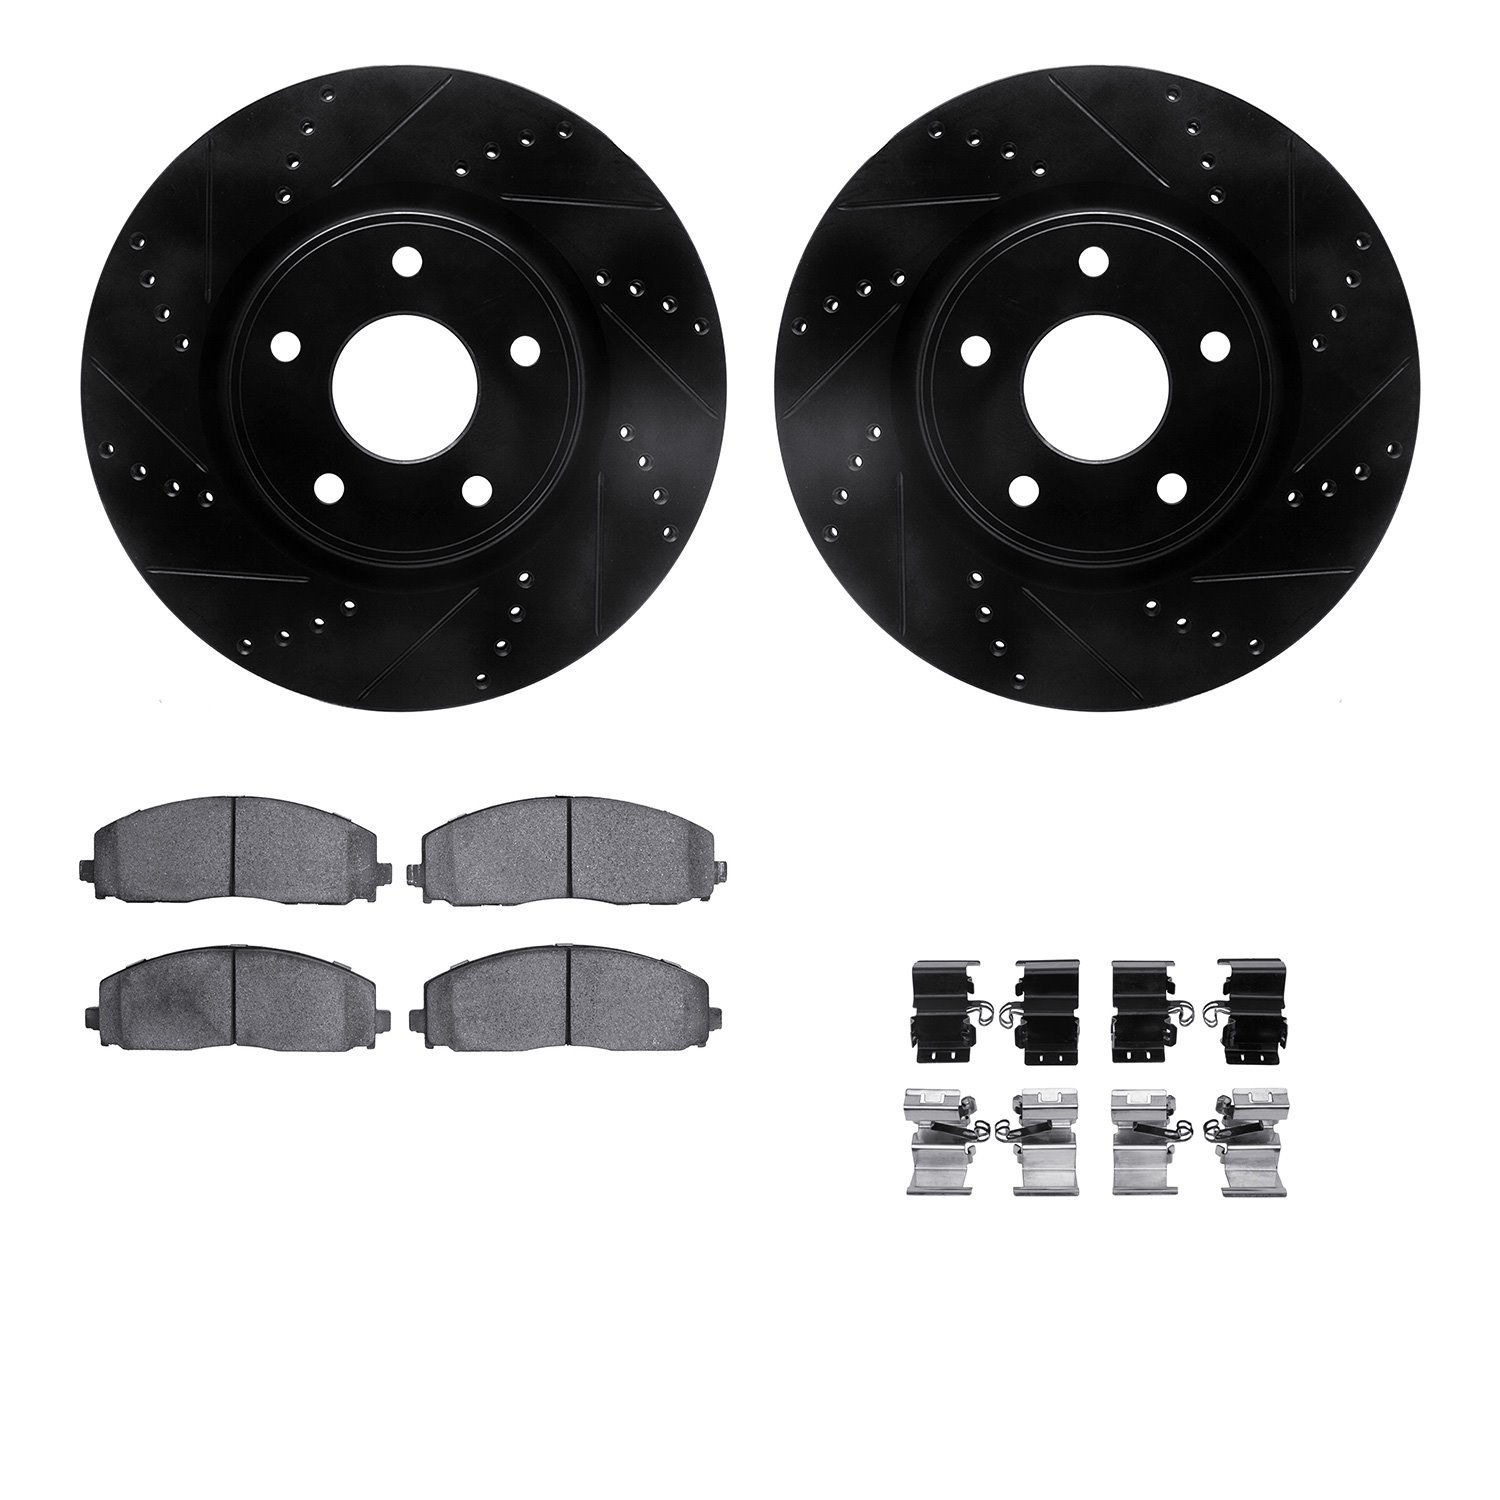 8312-40093 Drilled/Slotted Brake Rotors with 3000-Series Ceramic Brake Pads Kit & Hardware [Black], Fits Select Multiple Makes/M